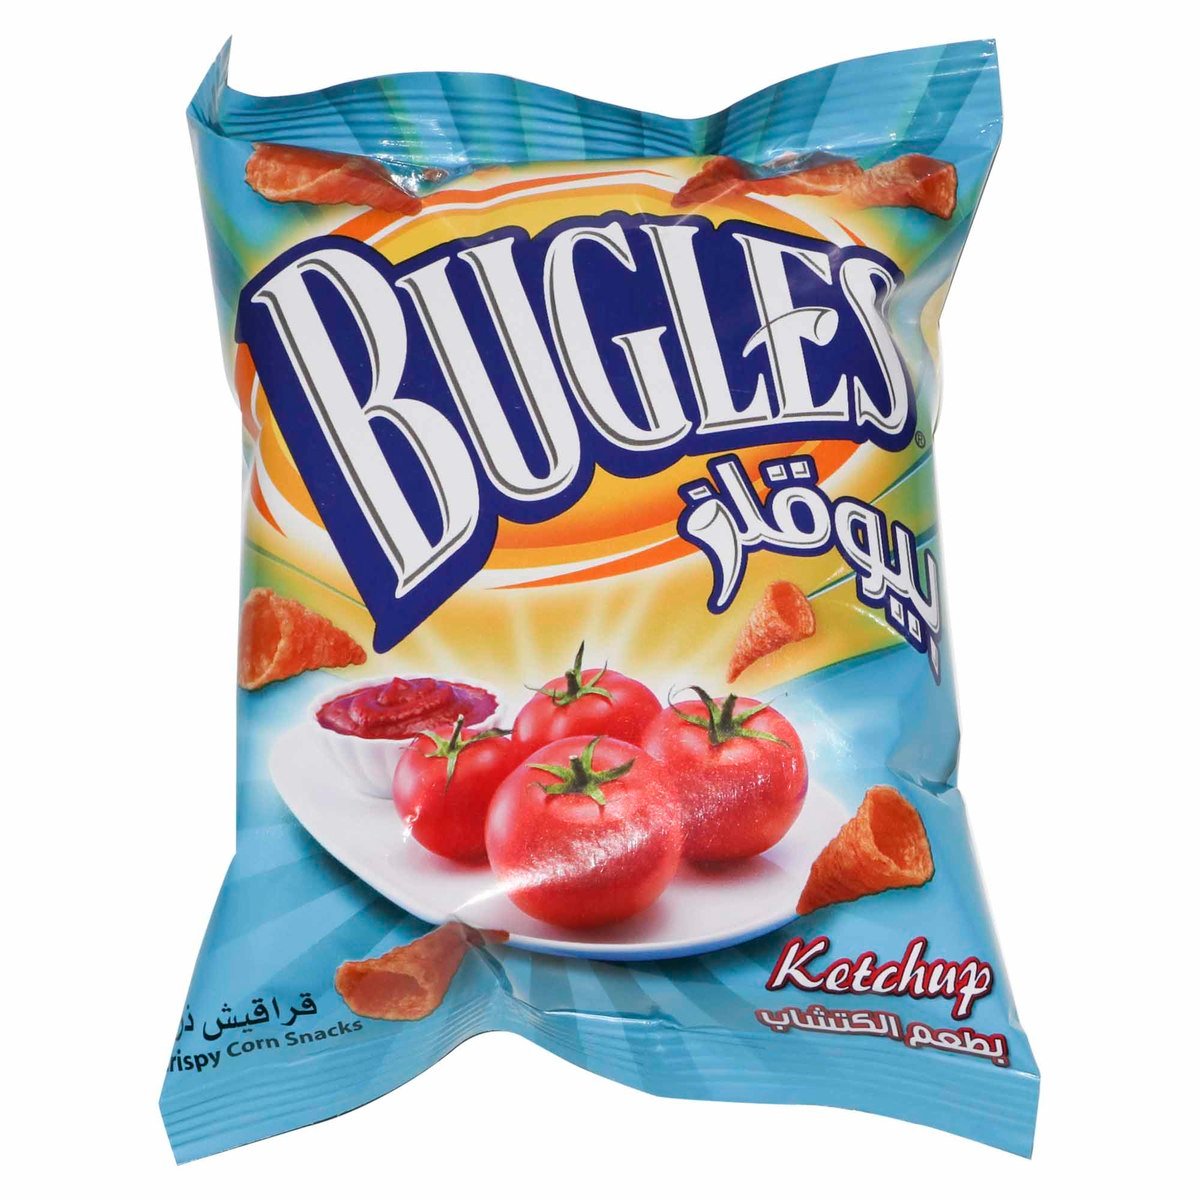 Bugles Corn Snack Ketchup 15 x 18g